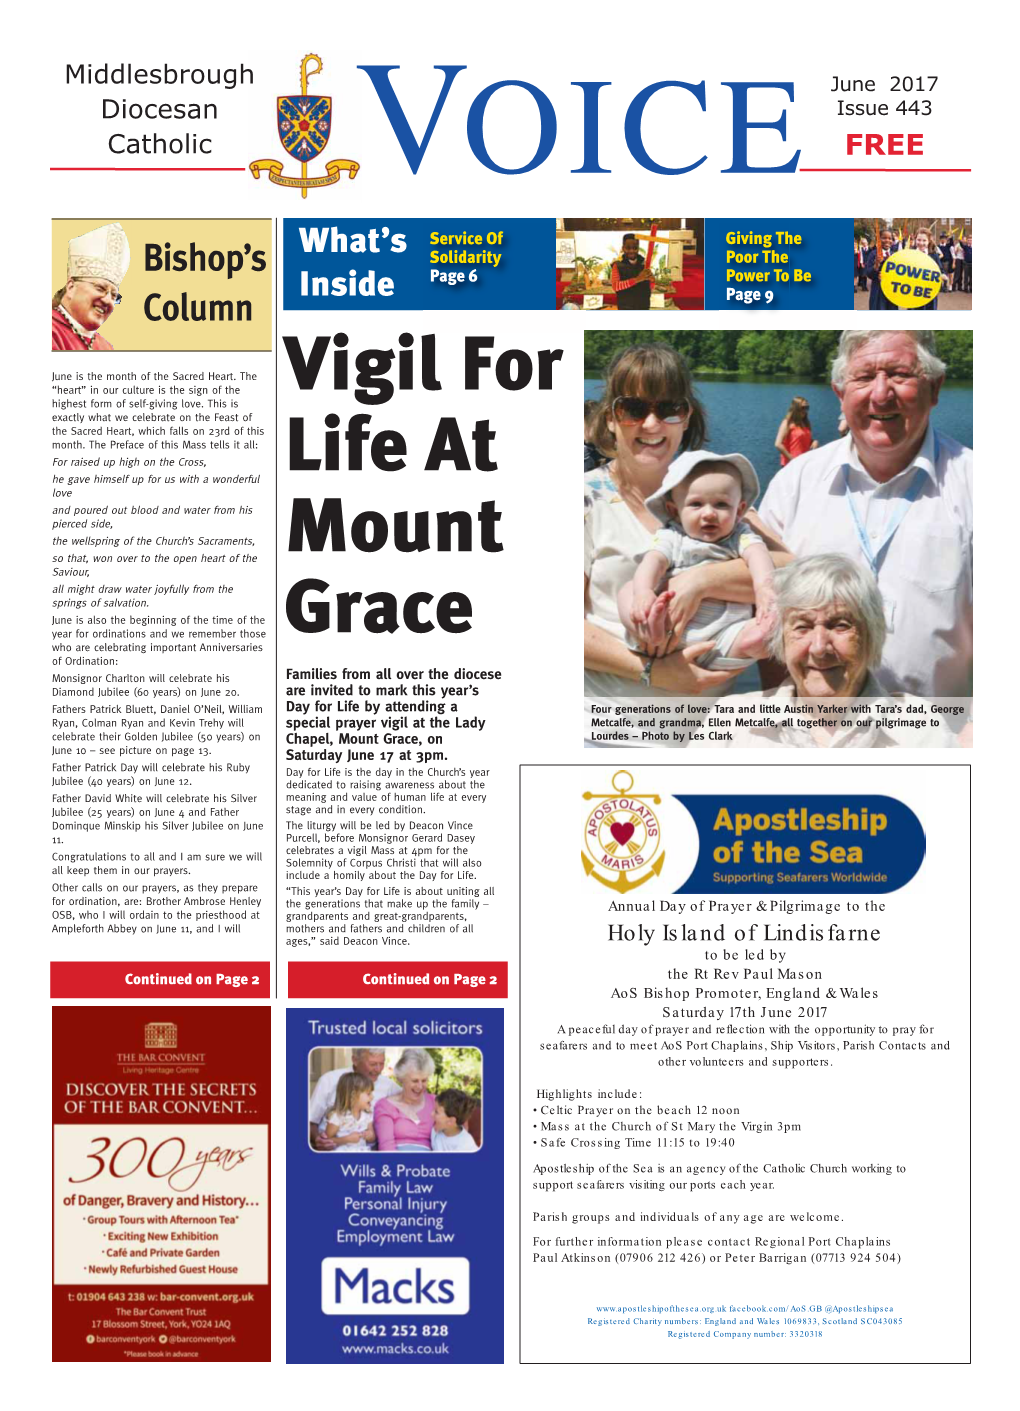 Vigil for Life at Mount Grace